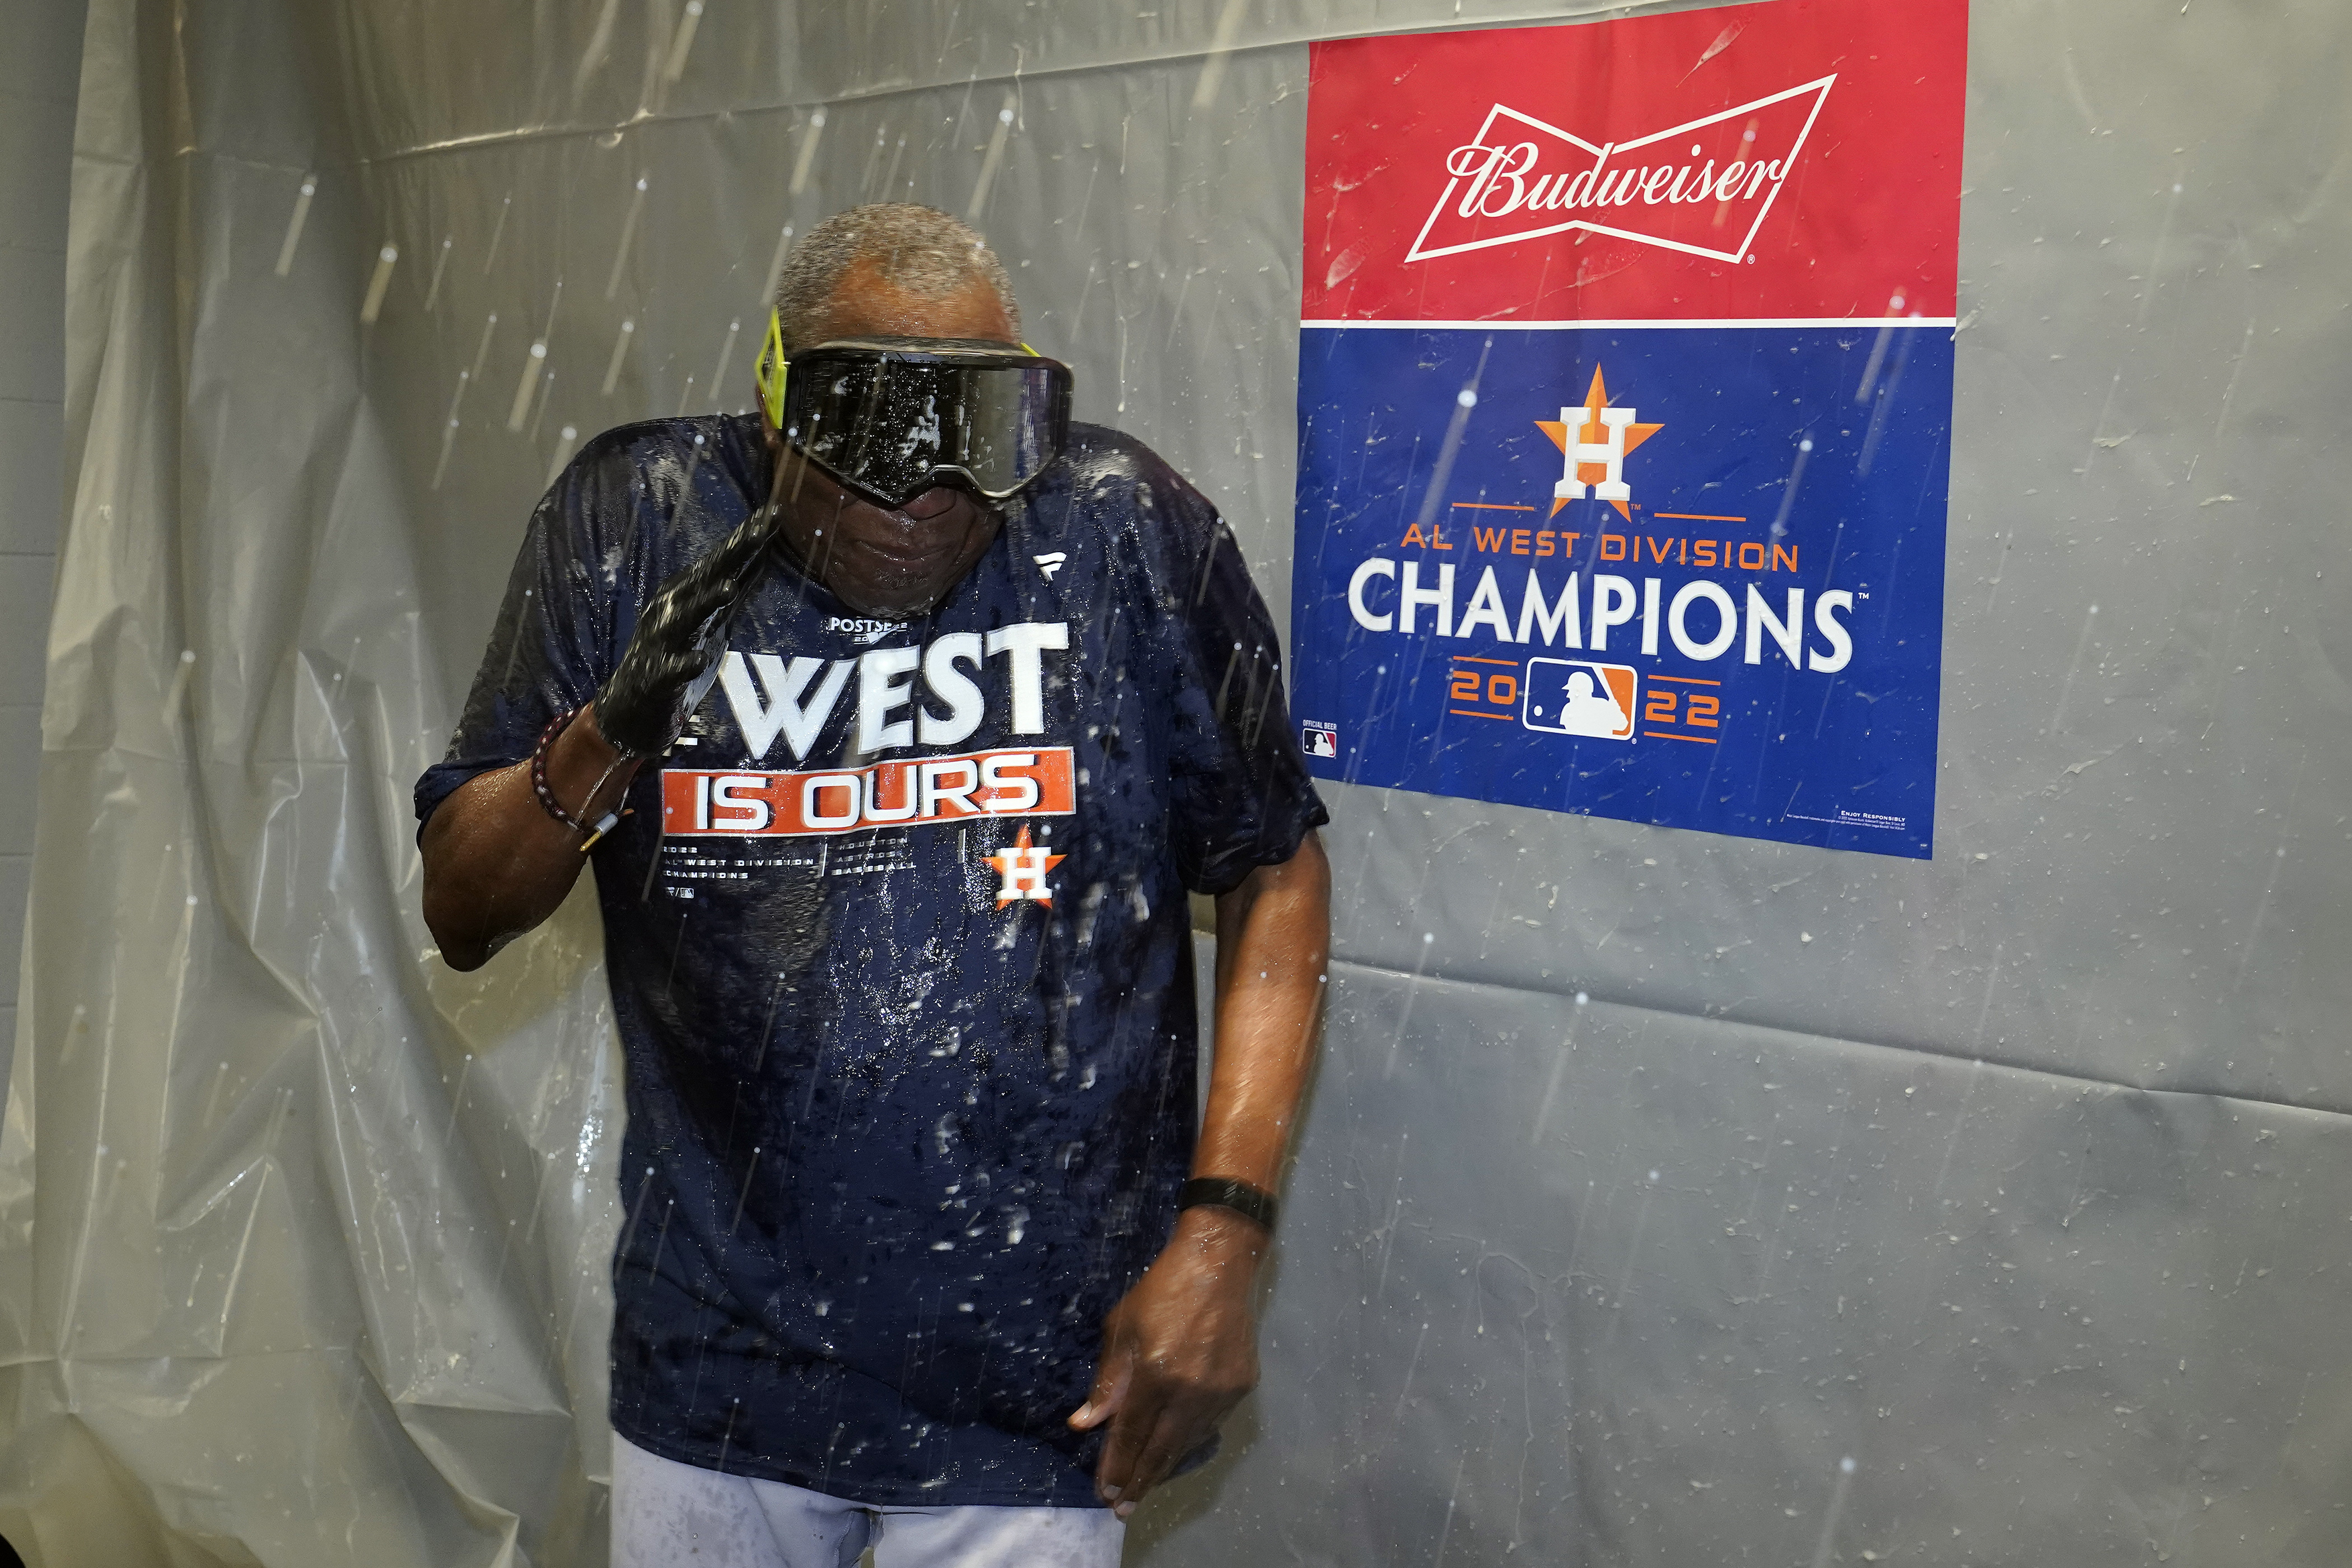 Astros clinch 2019 AL West division title